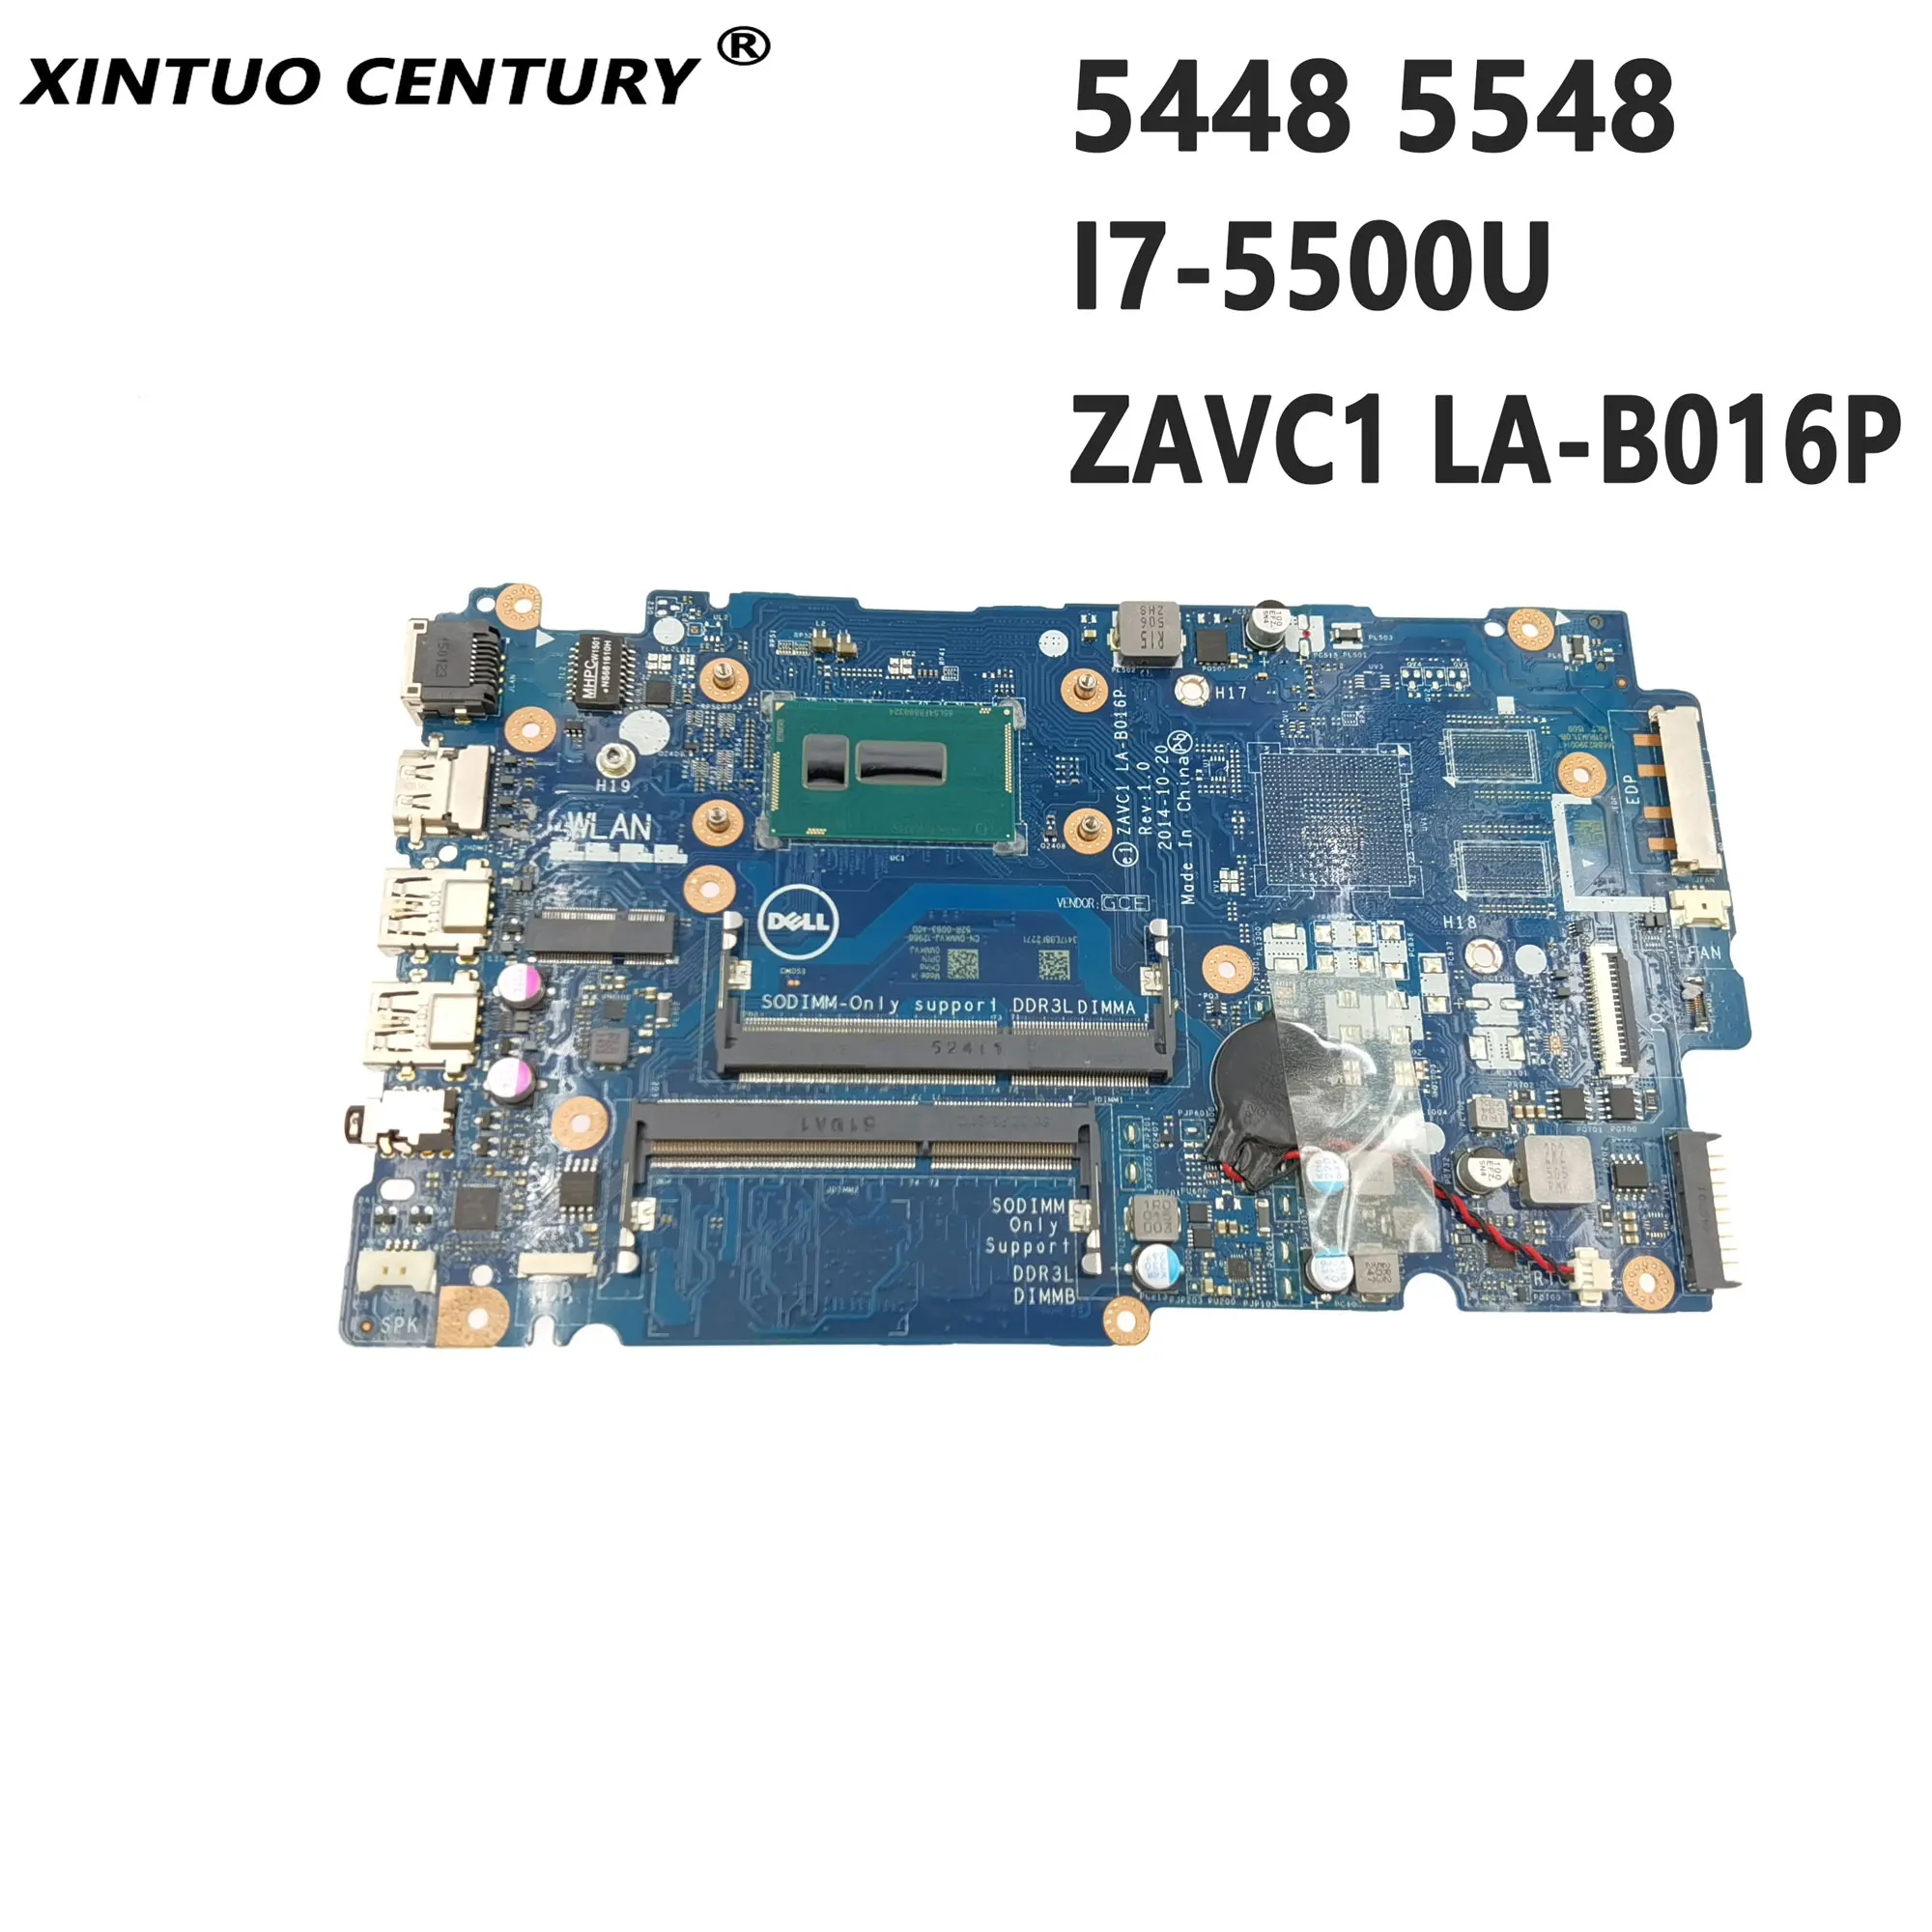 

CN-0MMKVJ MMKVJ is suitable for DELL Inspiron 5448 5548 computer motherboard ZAVC1 LA-B016P SR23W I7-5500U CPU DDR3 100% tested